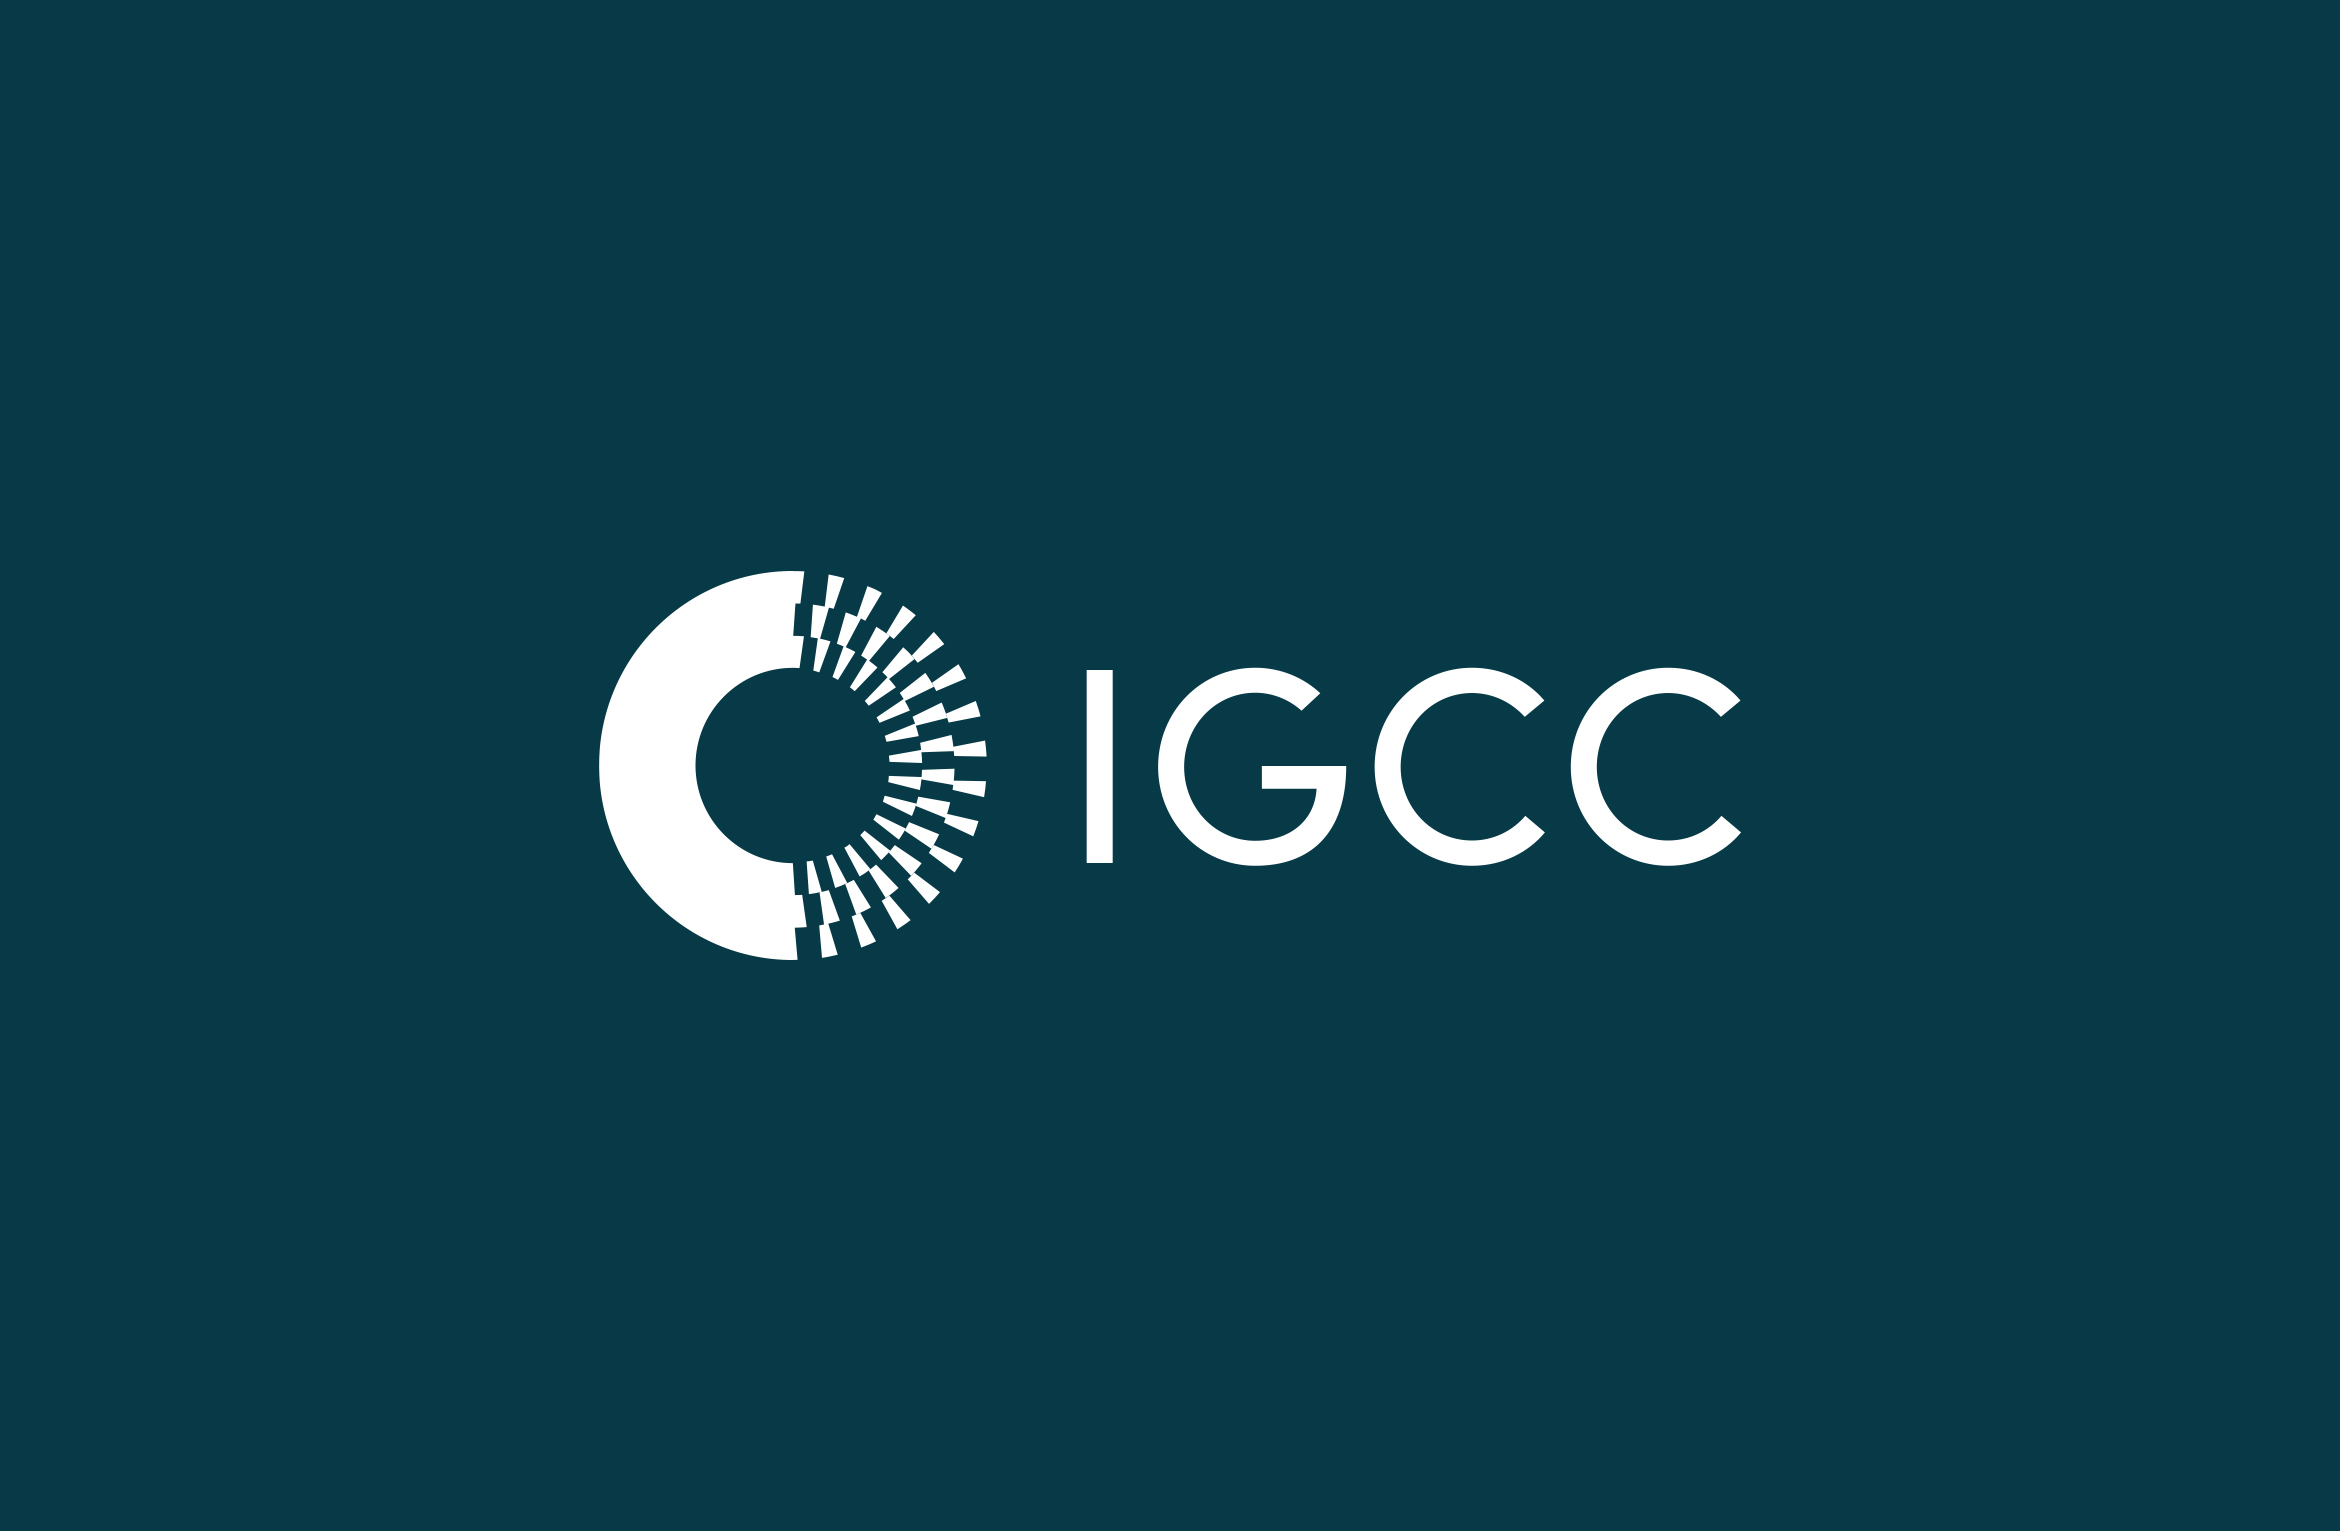 IGCC logo lockup in white on teal background